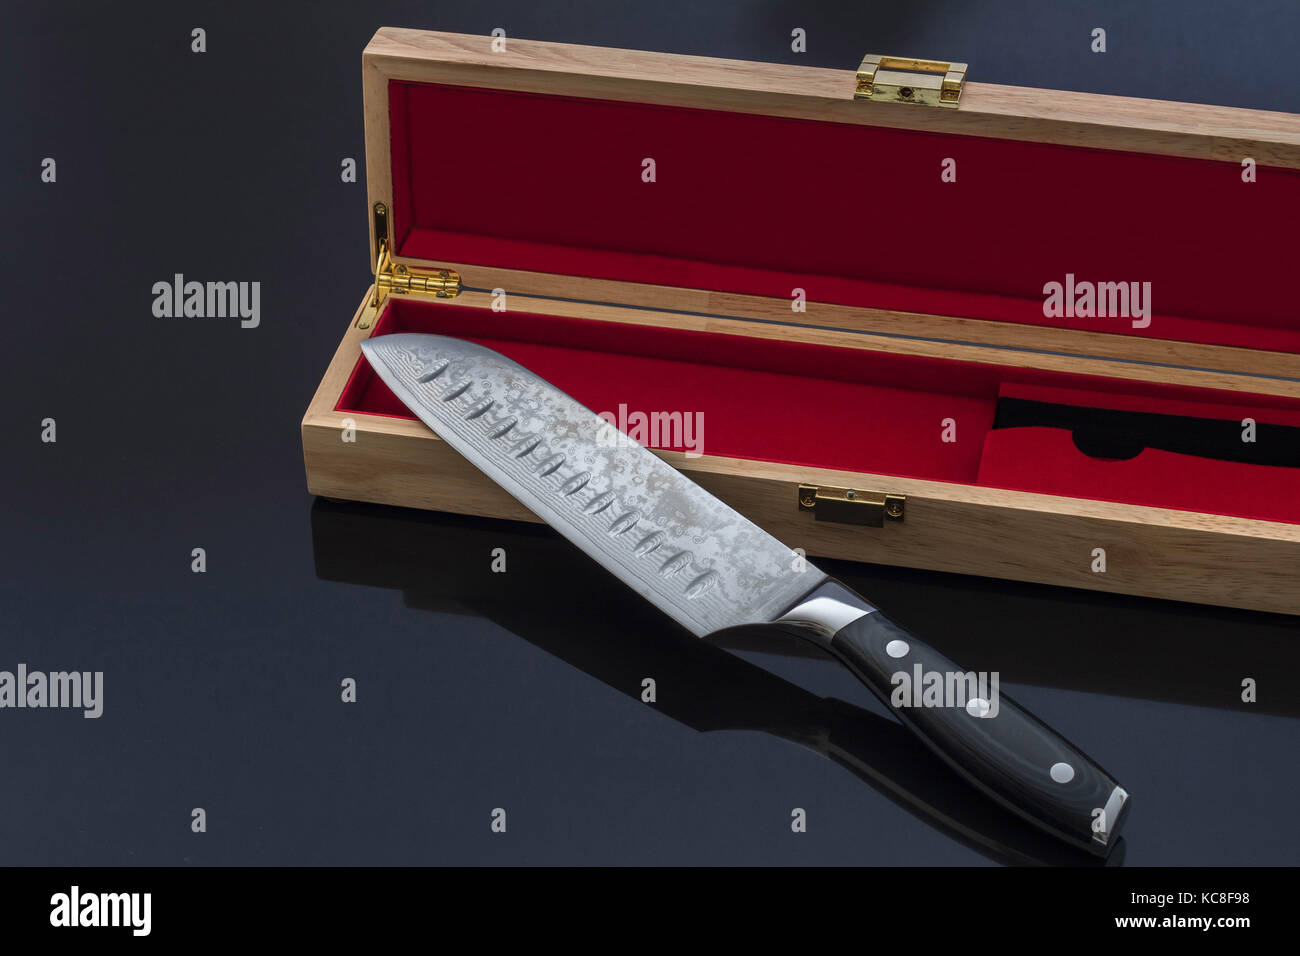 Santoku Kitchen Knife with Elegant Wood Box on Black Reflective Surface Stock Photo